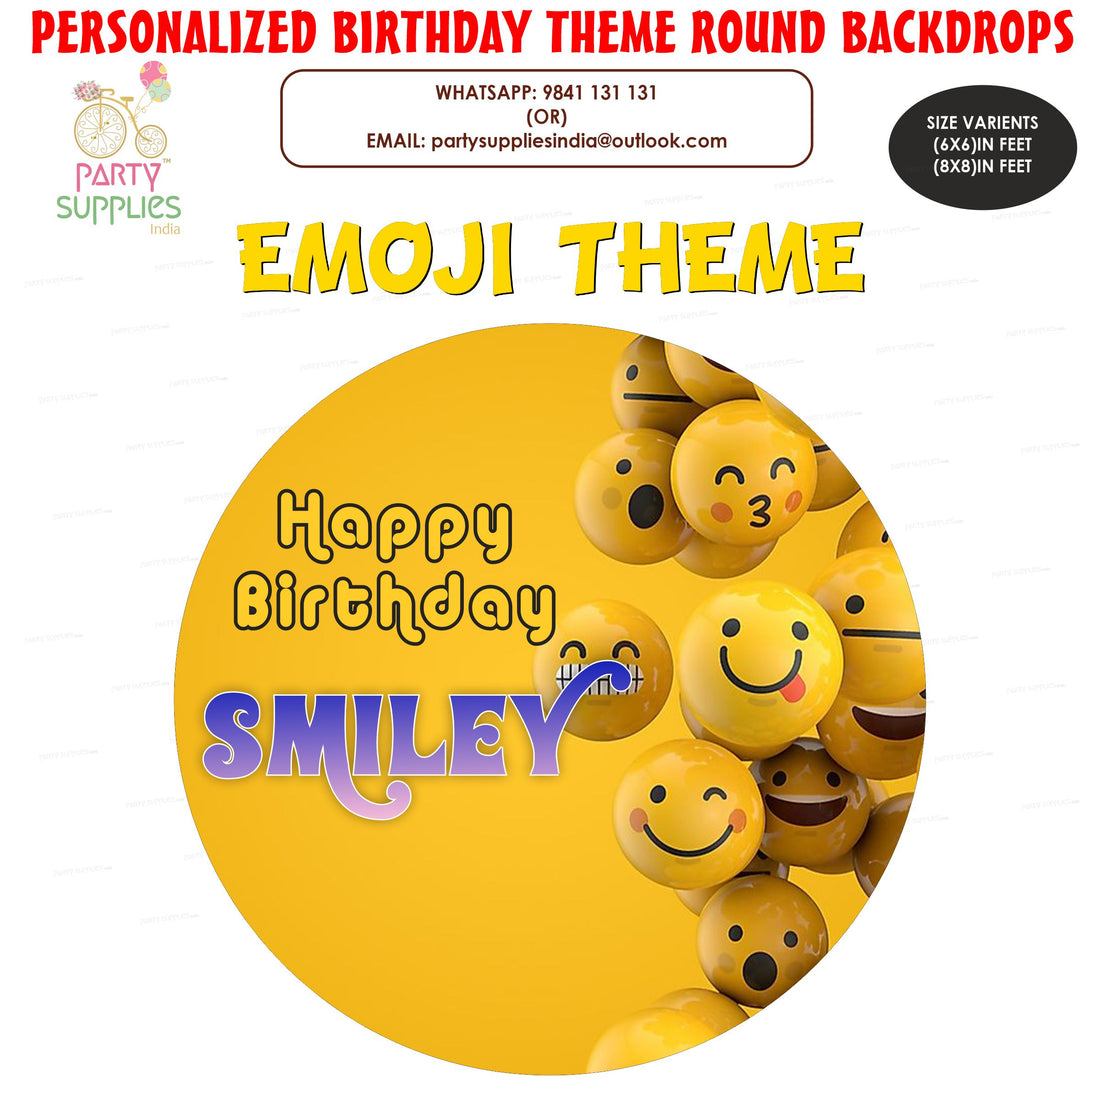 PSI Emoji Theme Round Customized Backdrop